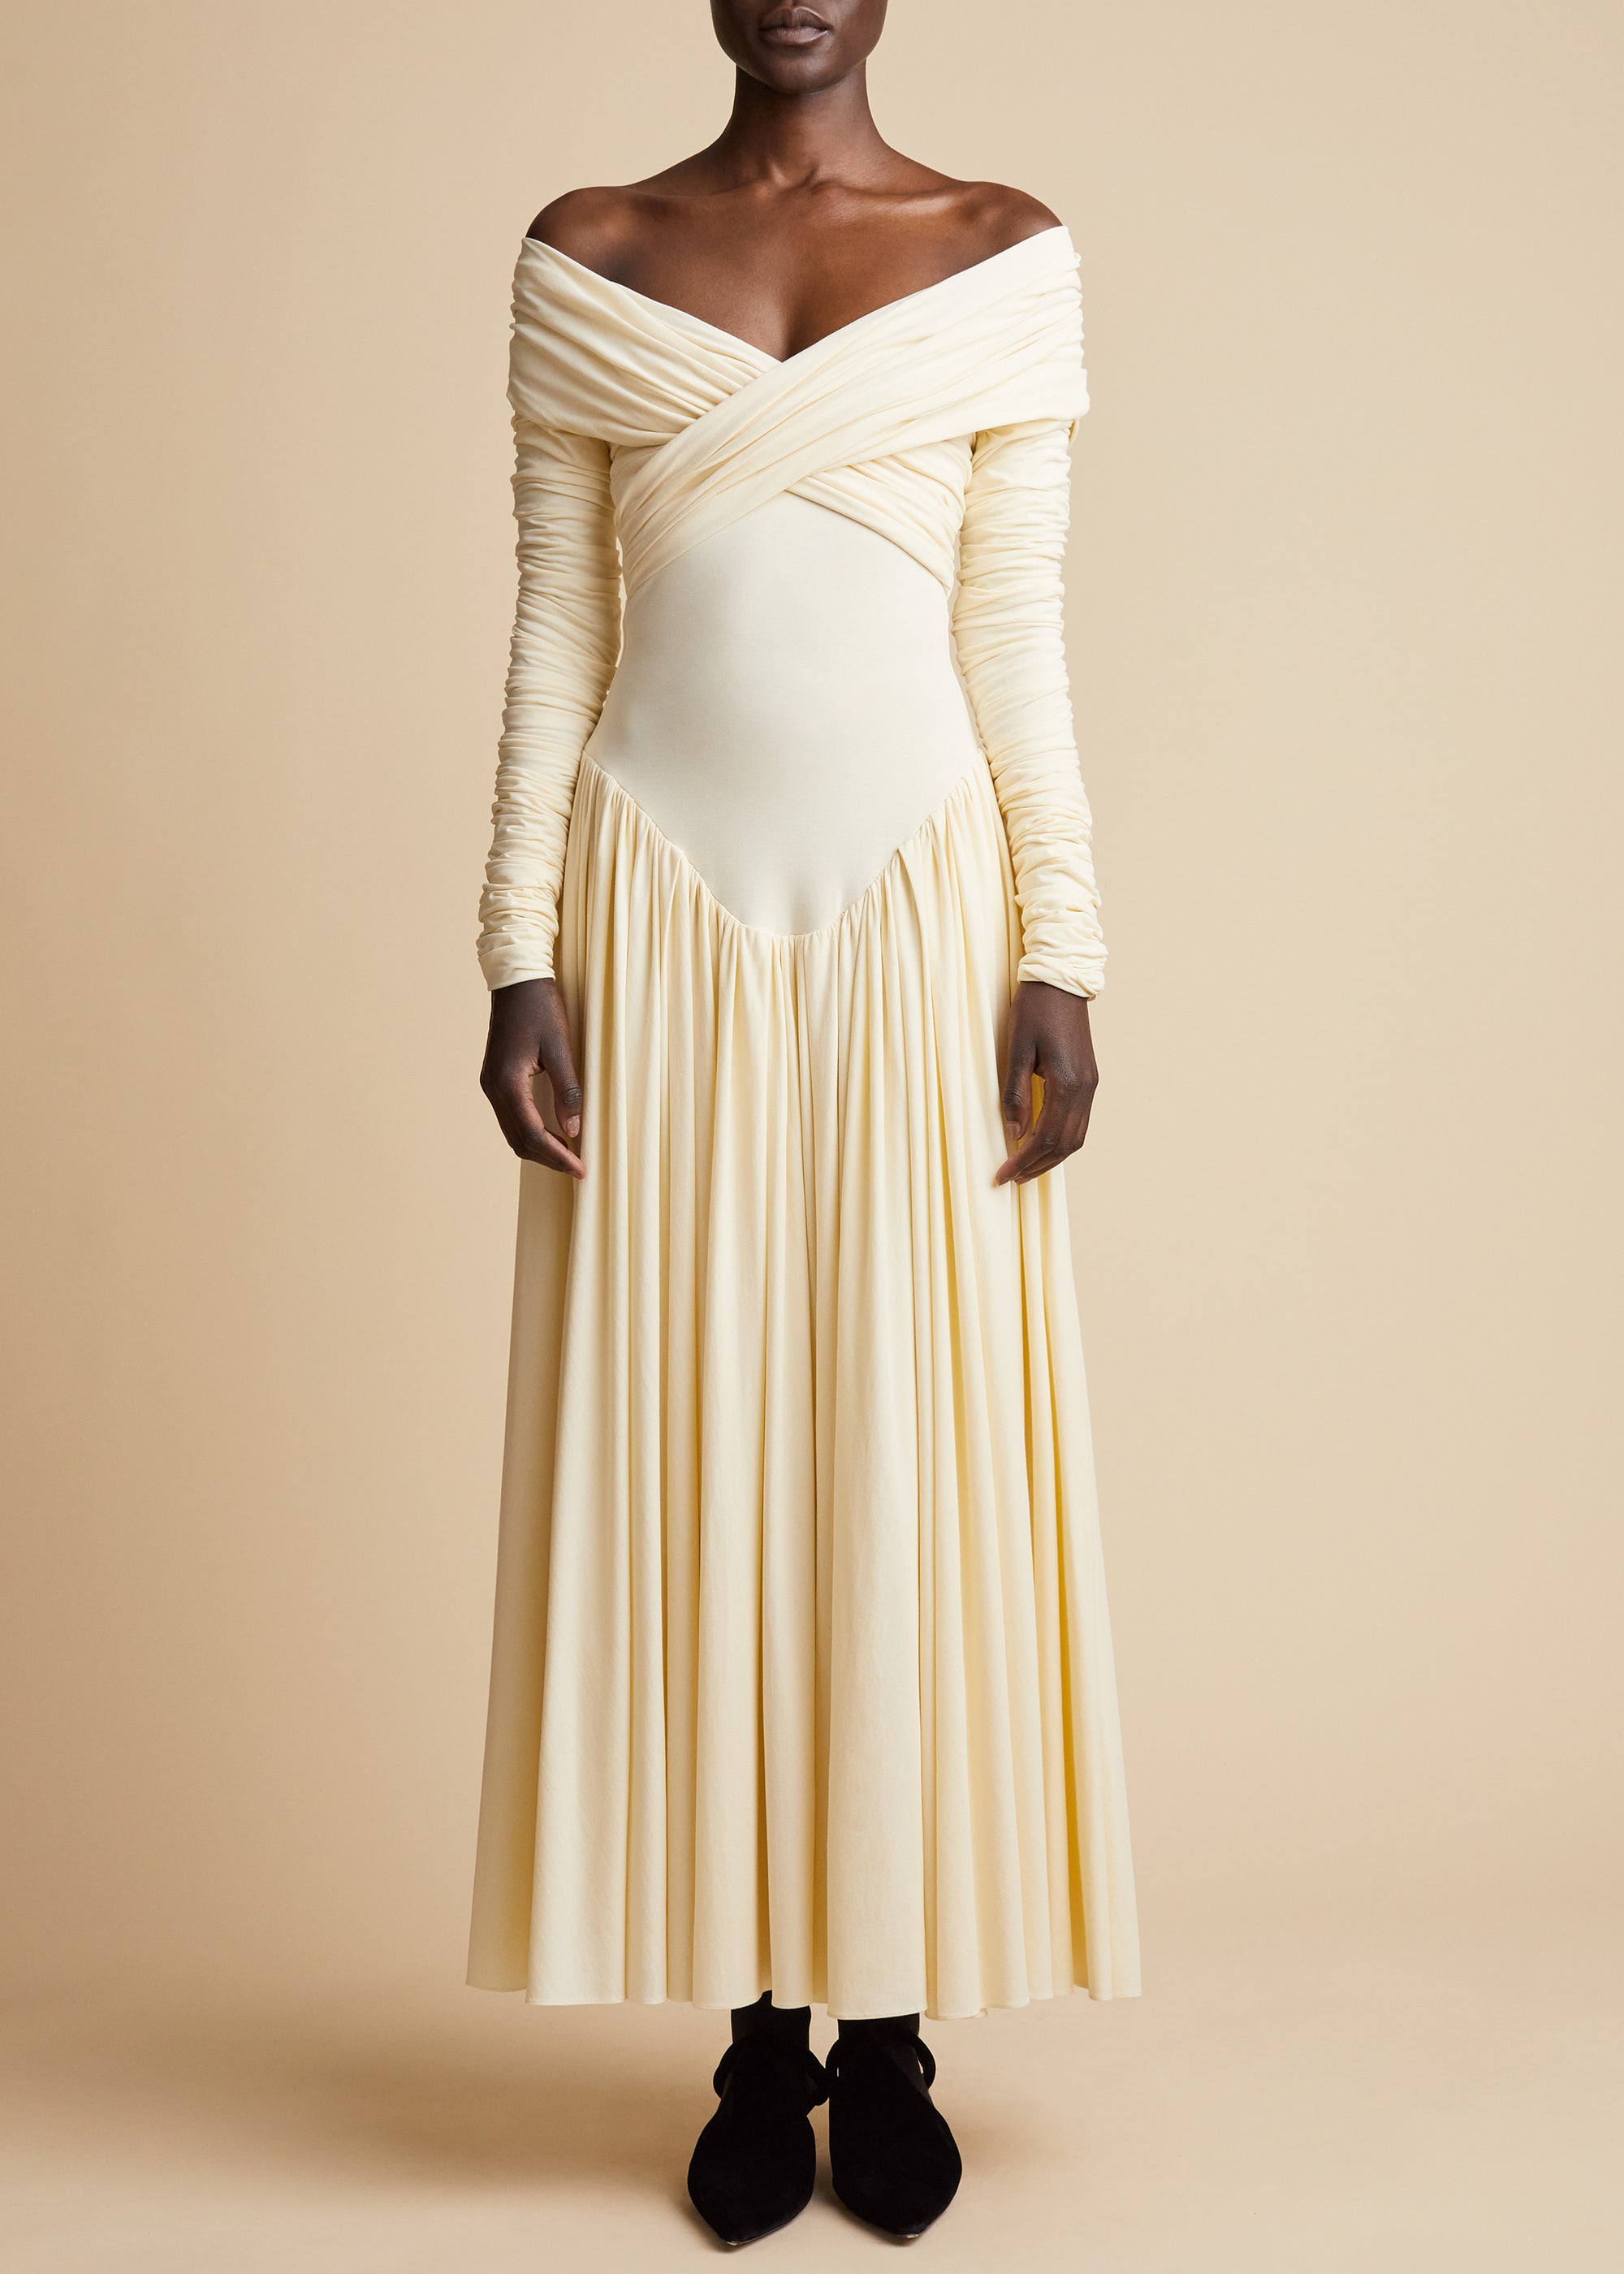 Lilibet dress - Cream